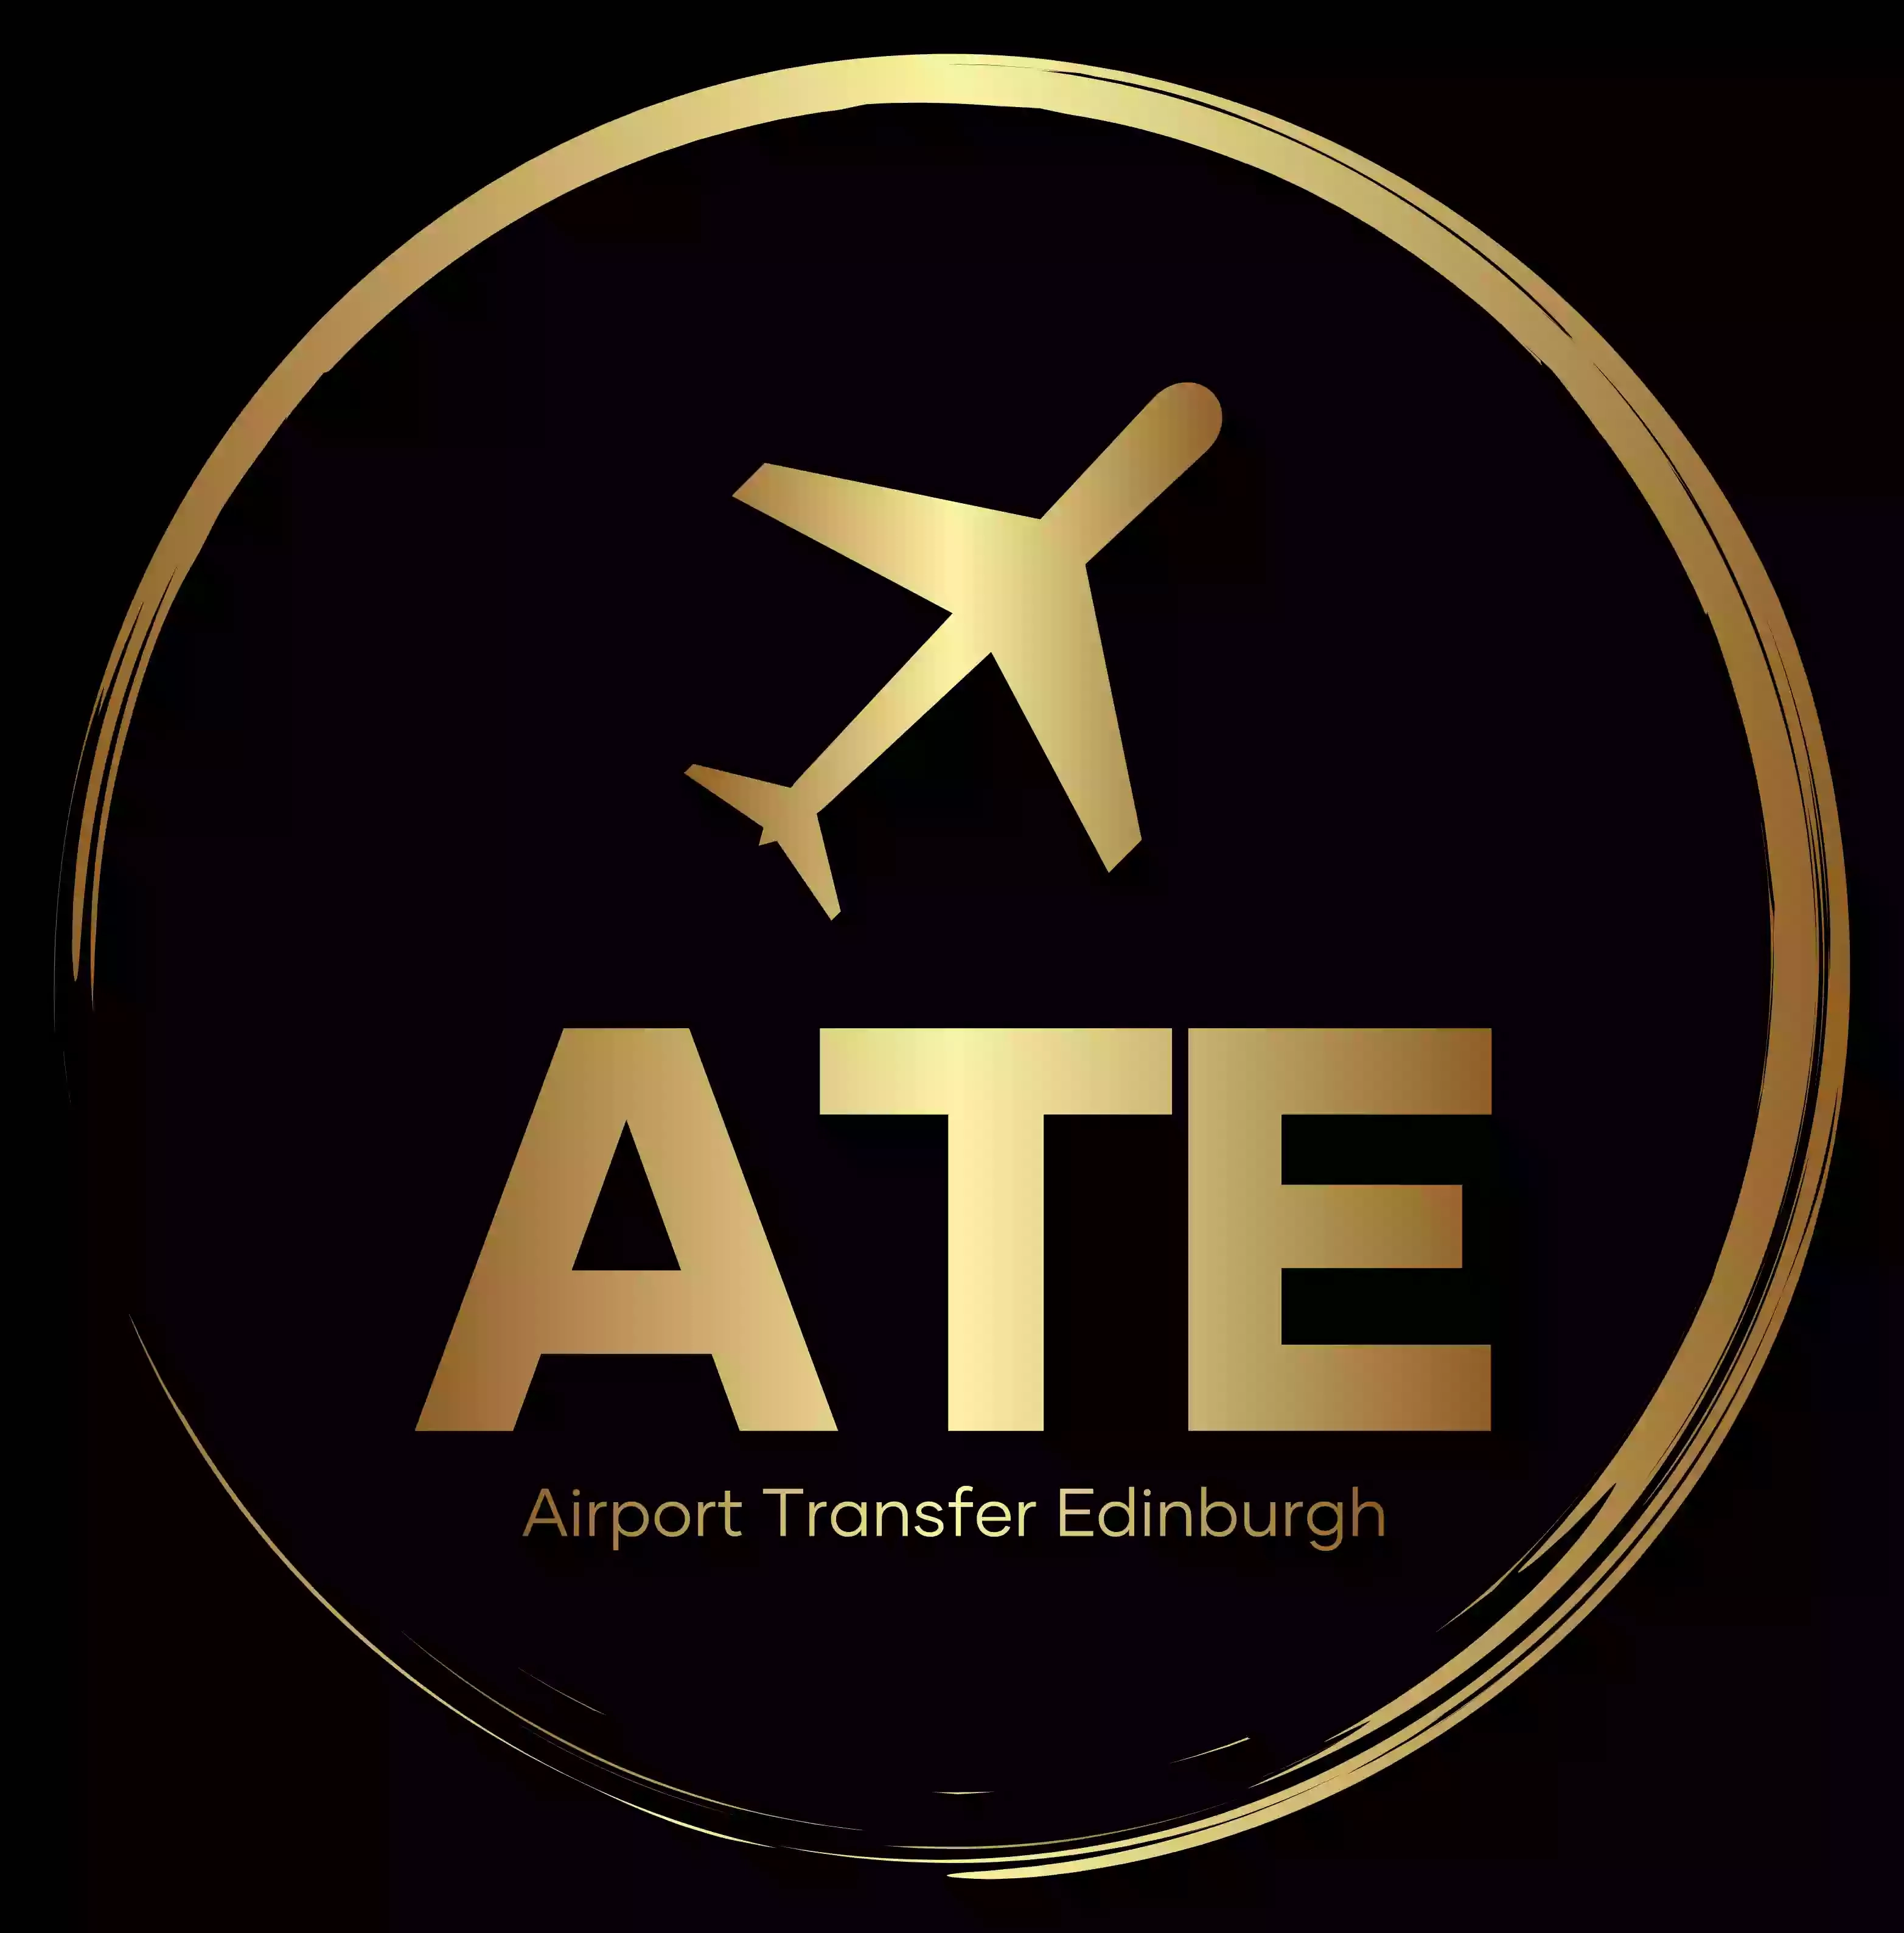 Airport Transfer Edinburgh